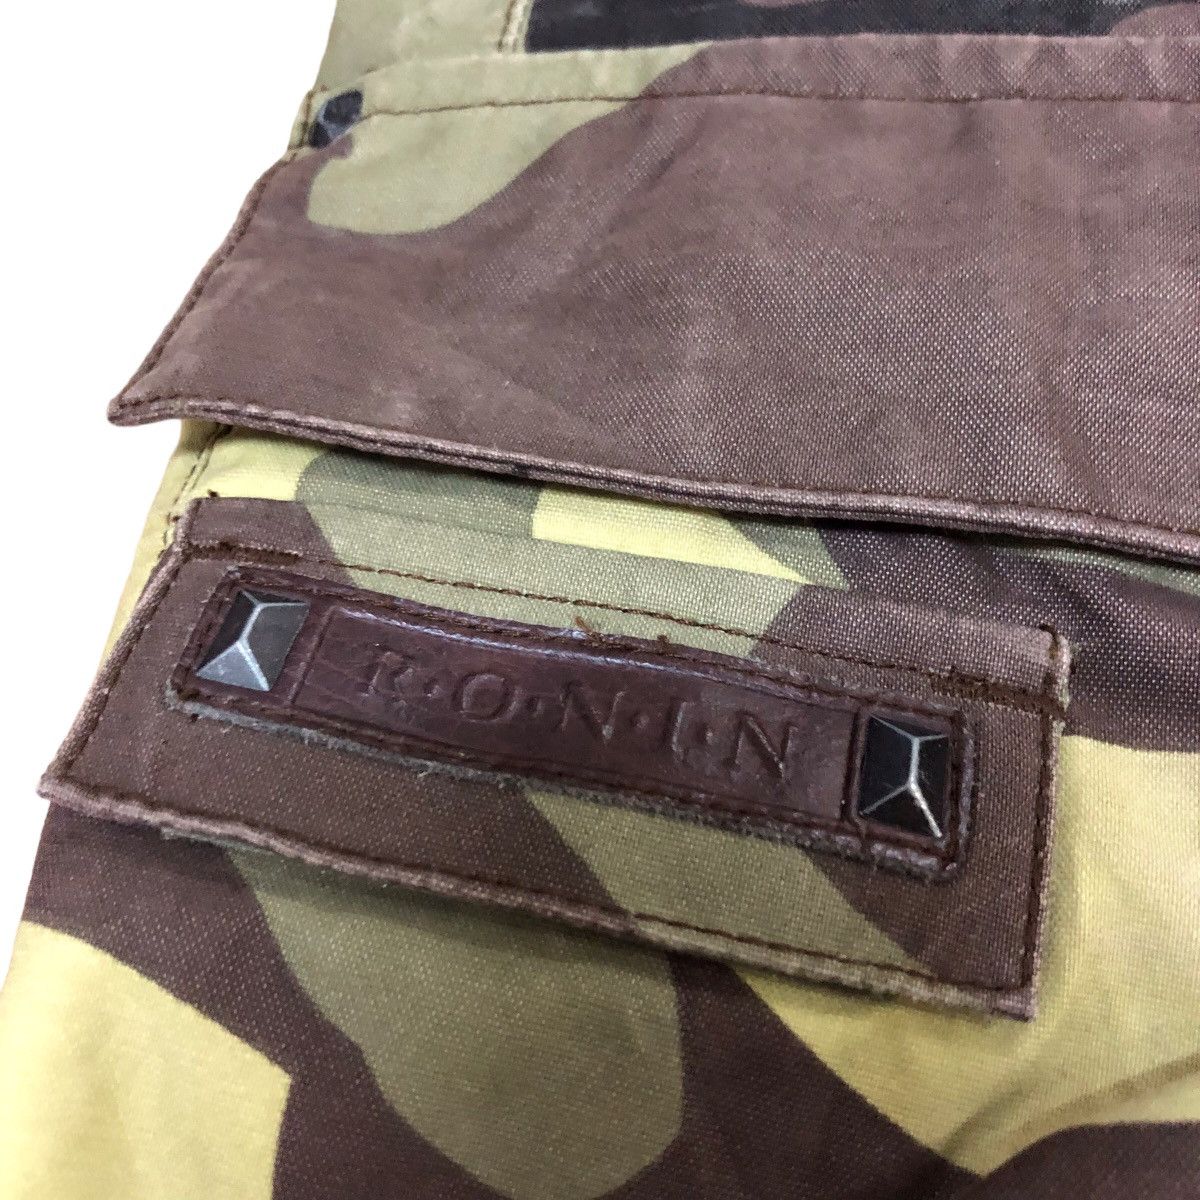 Ronin burton dryride outerwear camouflage snowboard pants - 5